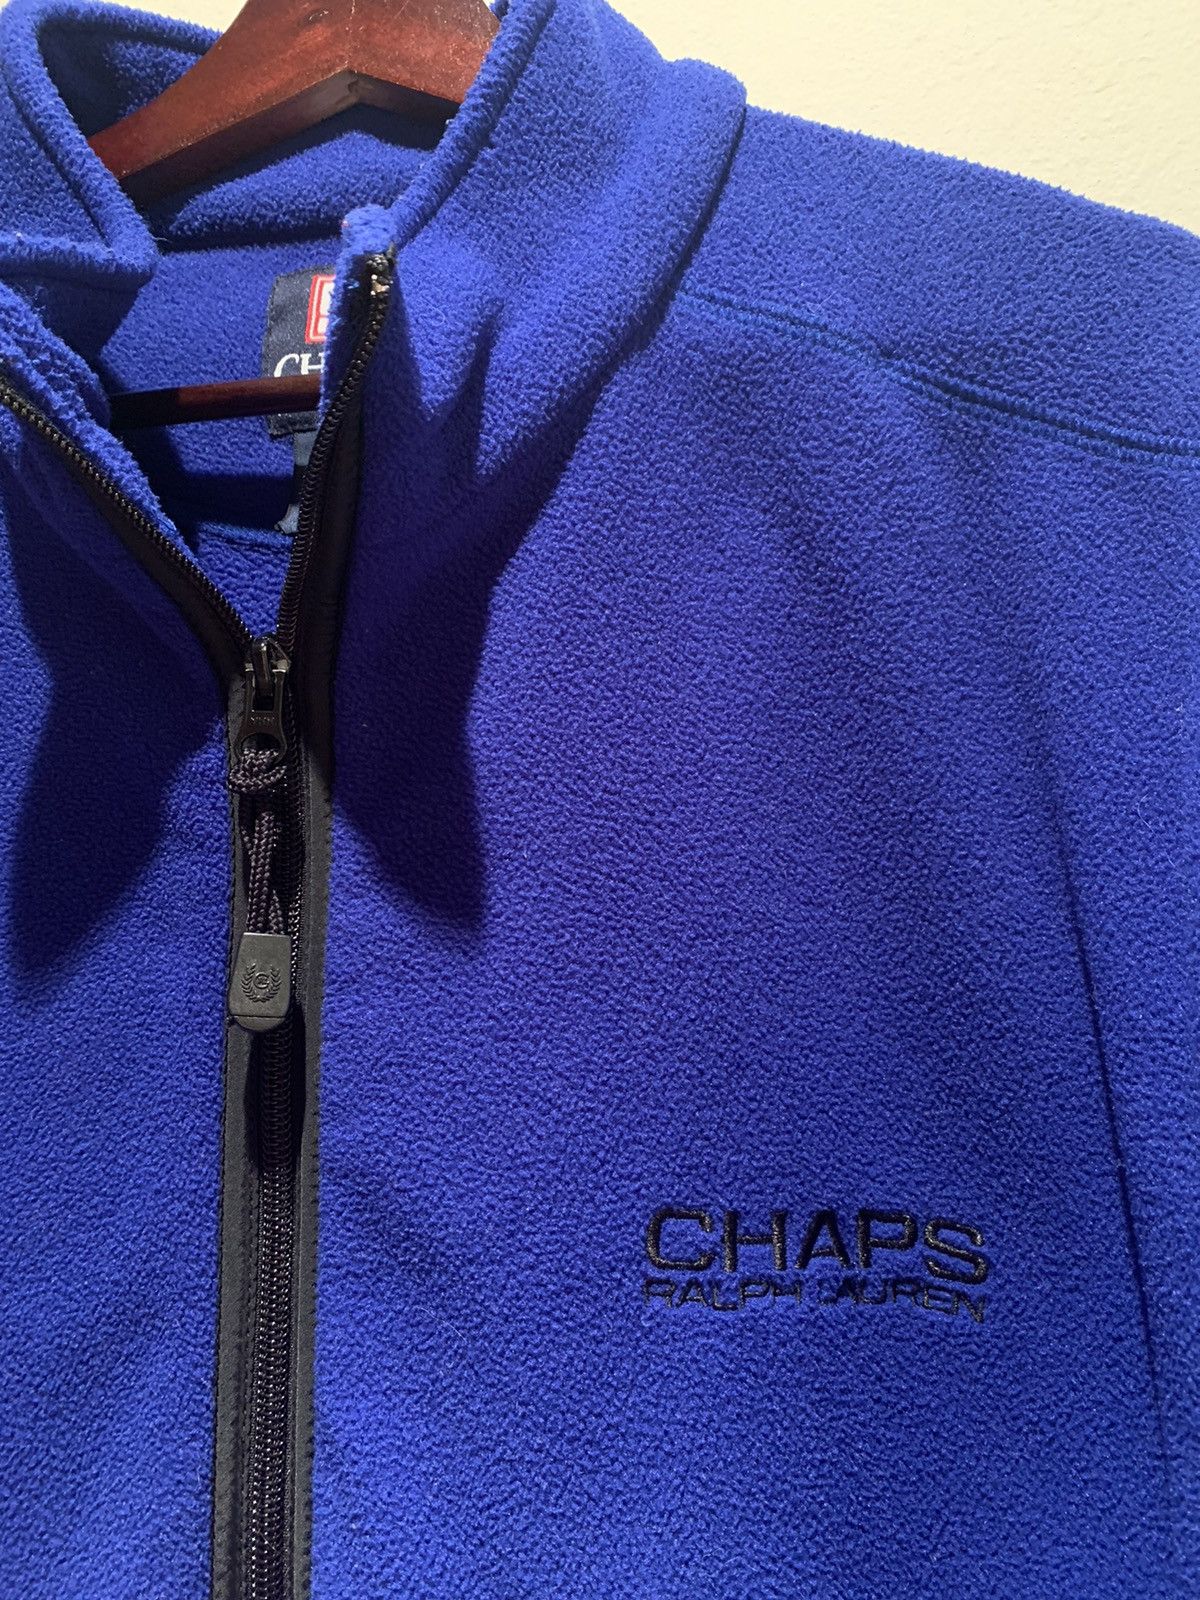 Ralph Lauren *RARE* Vintage Chaps x Ralph Lauren Fleece Zip-Up Jacket - L Size US L / EU 52-54 / 3 - 5 Thumbnail